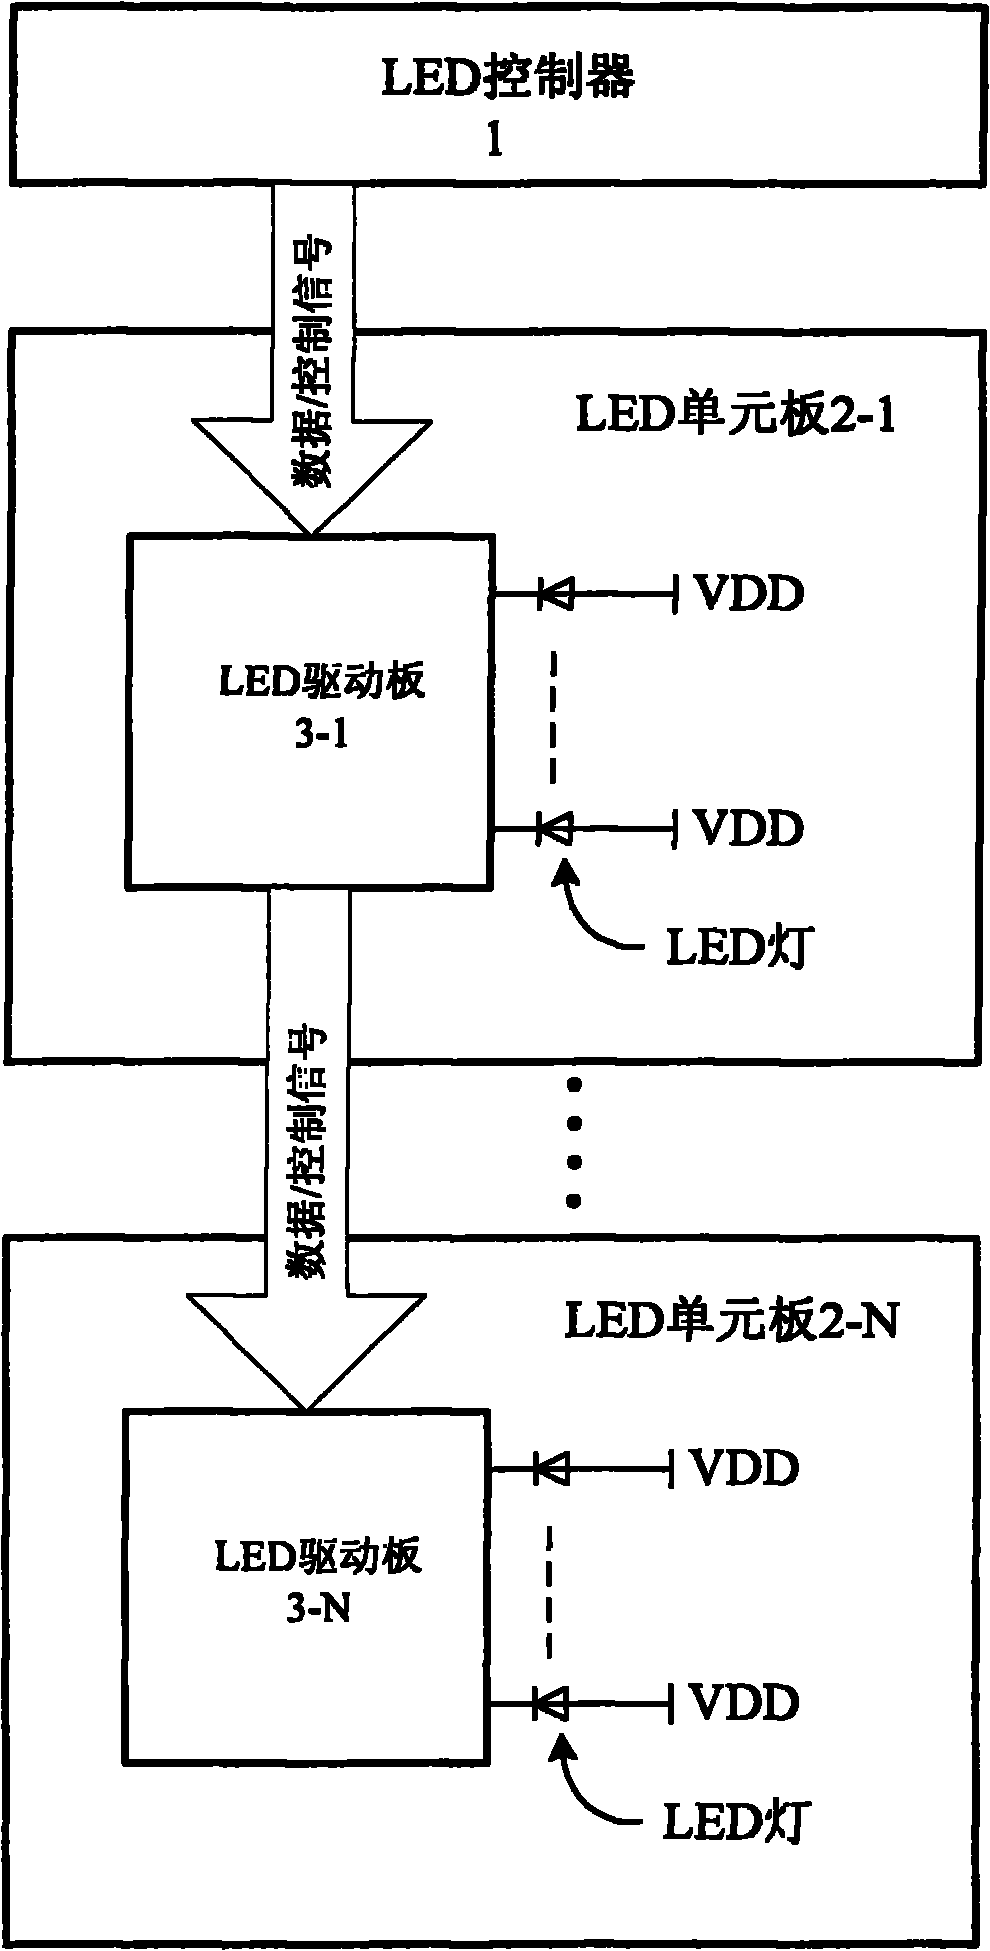 Light-emitting diode (LED) display system and method having pulse scattering mode